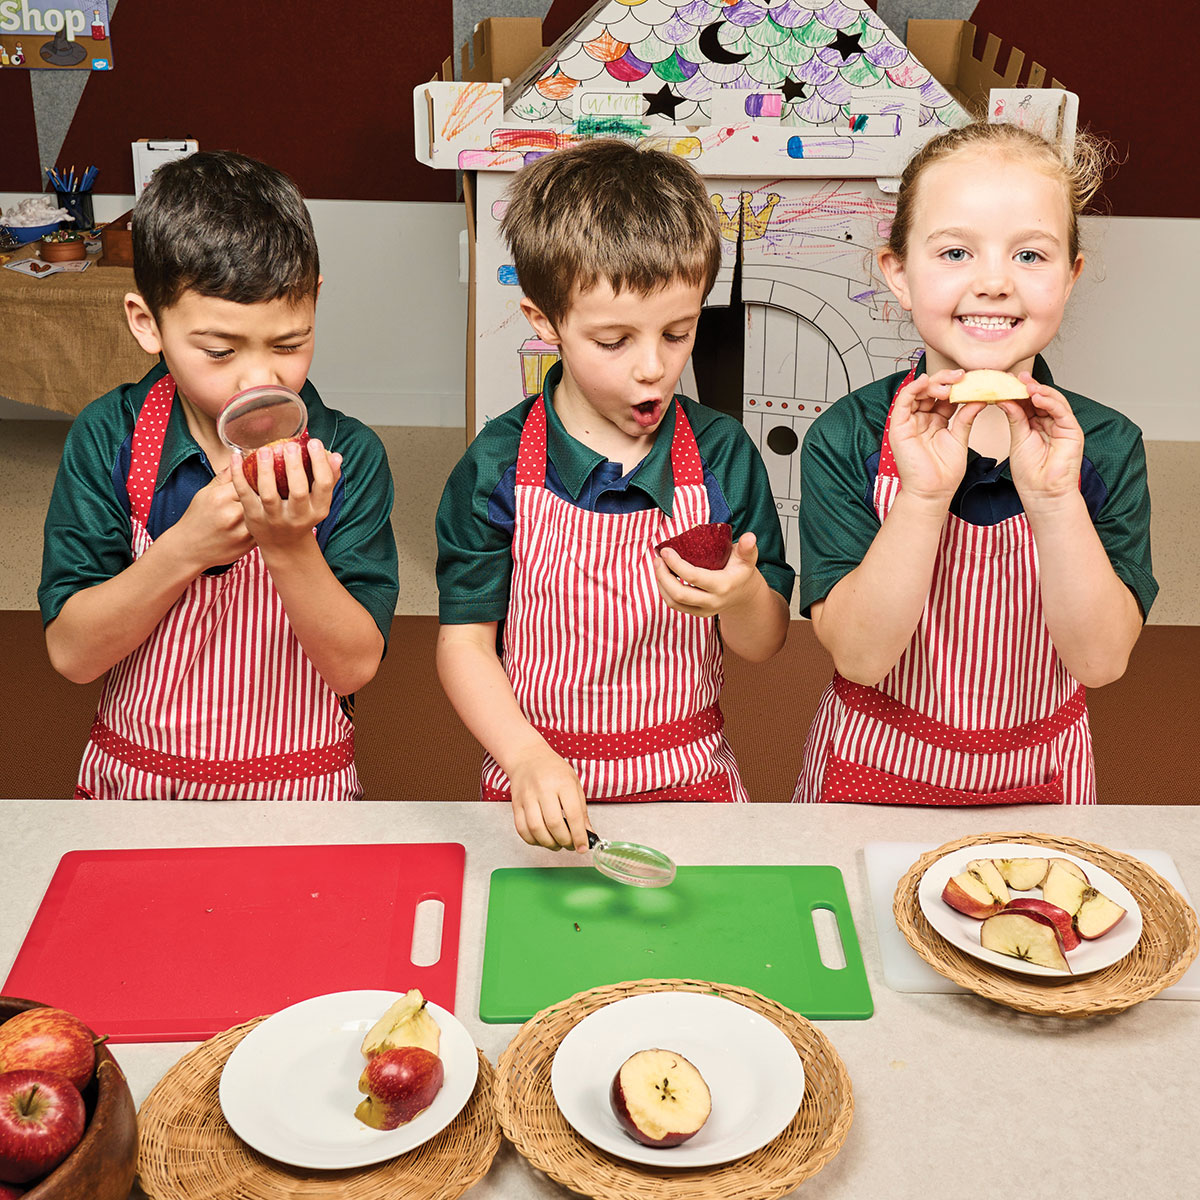 Sunshine Coast Grammar School students pretending to chop apples in the kitchen